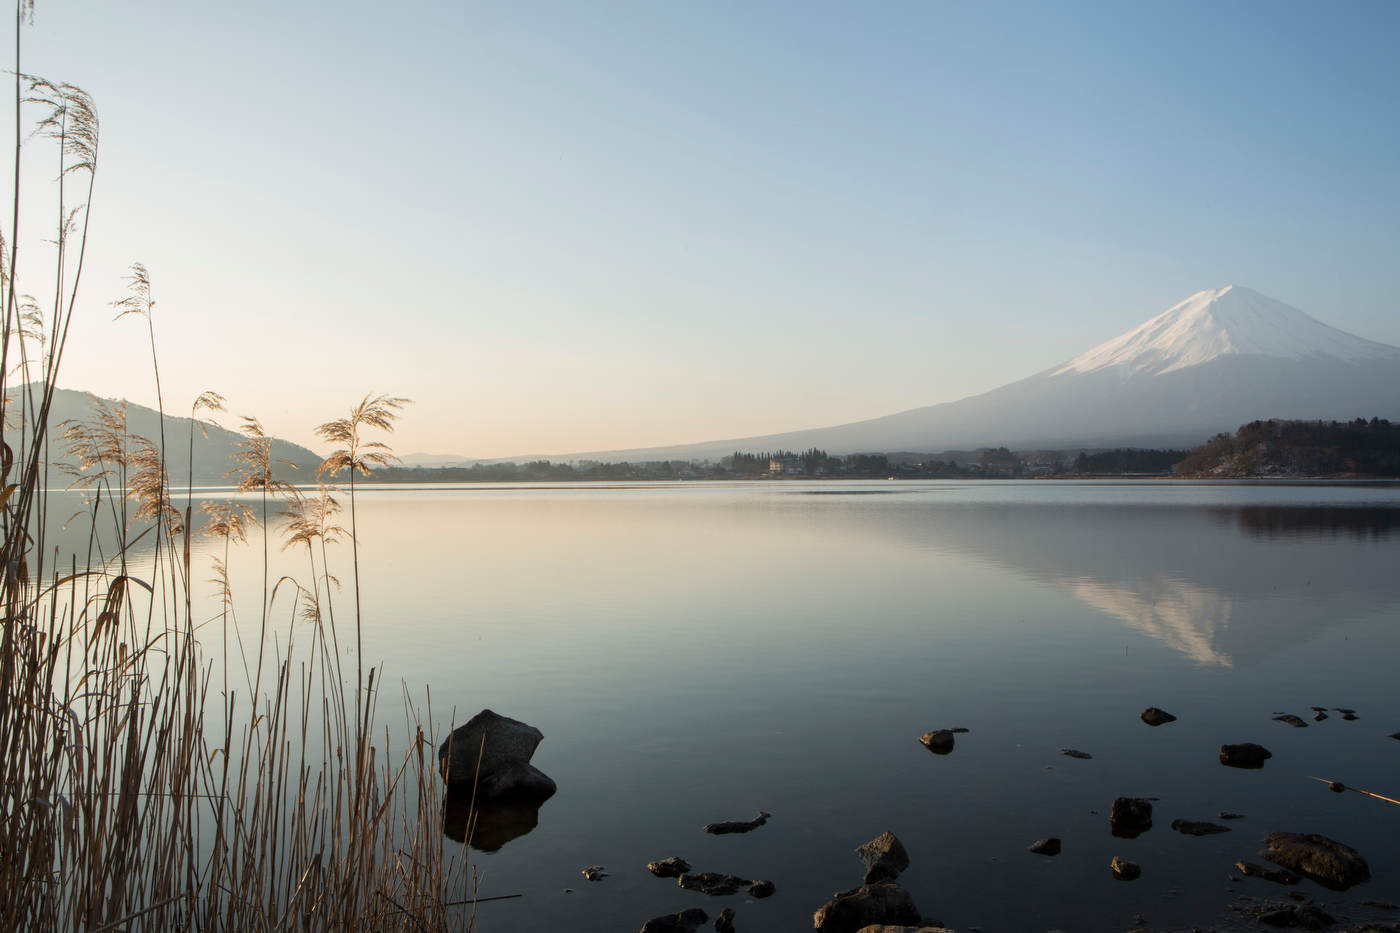 Mt. Fuji reflects in the waters of Lake Kawaguchiko.